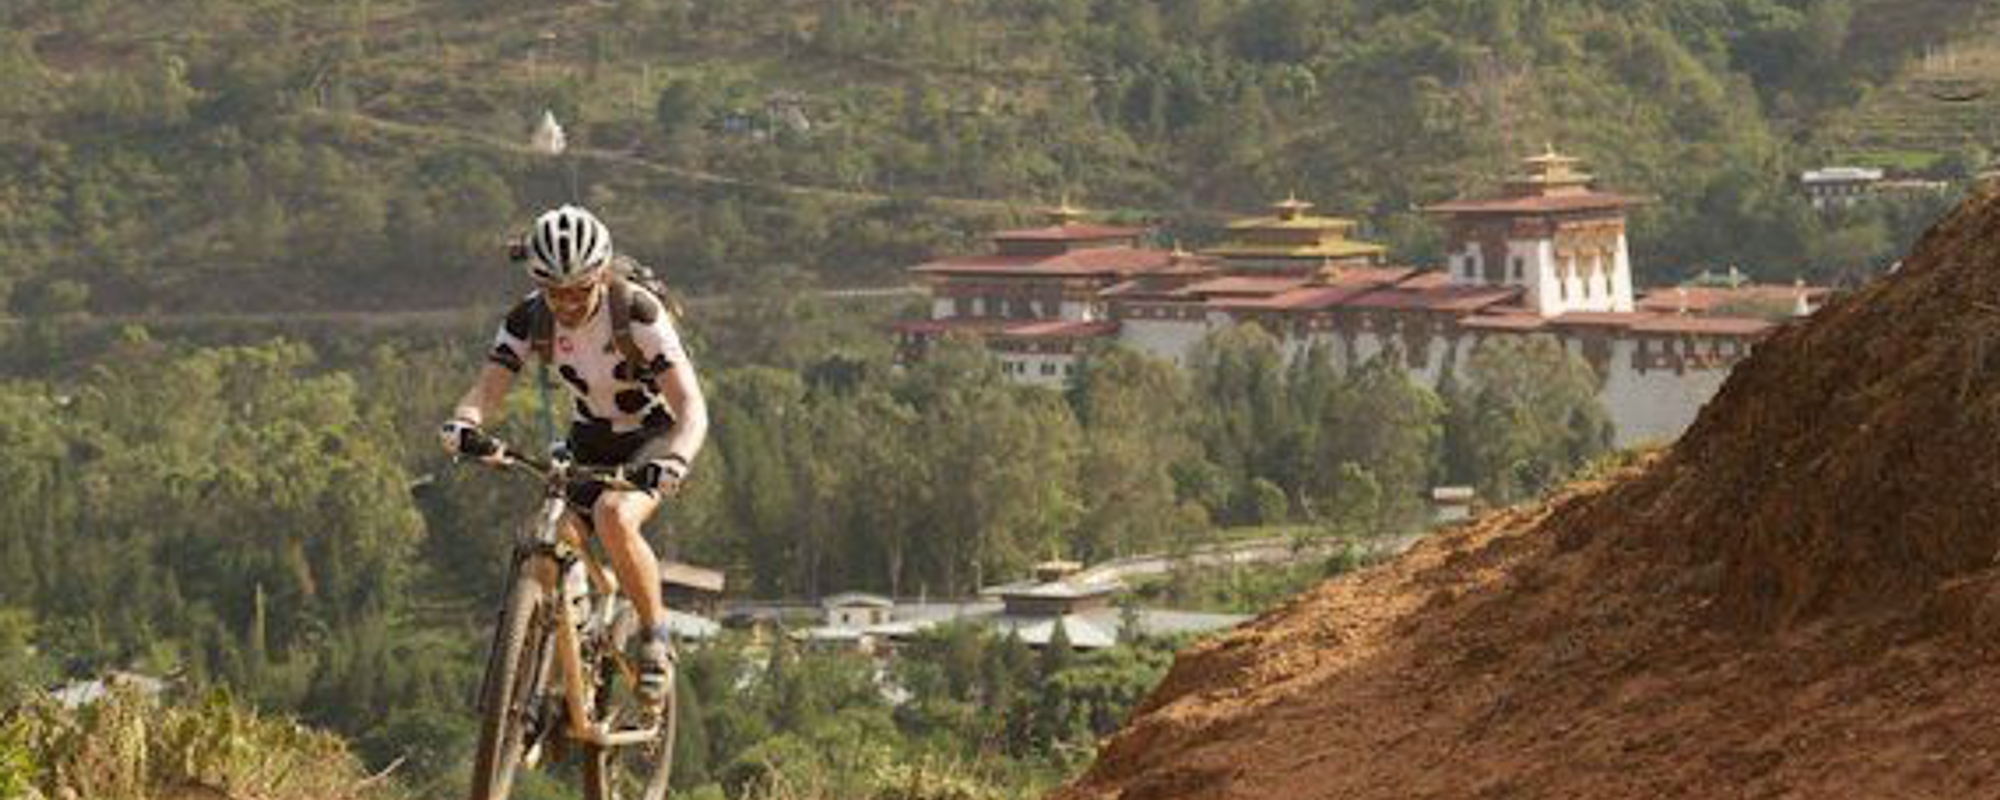 Bhutan: Tour of the Dragon MTB race (3) – through the darkest times